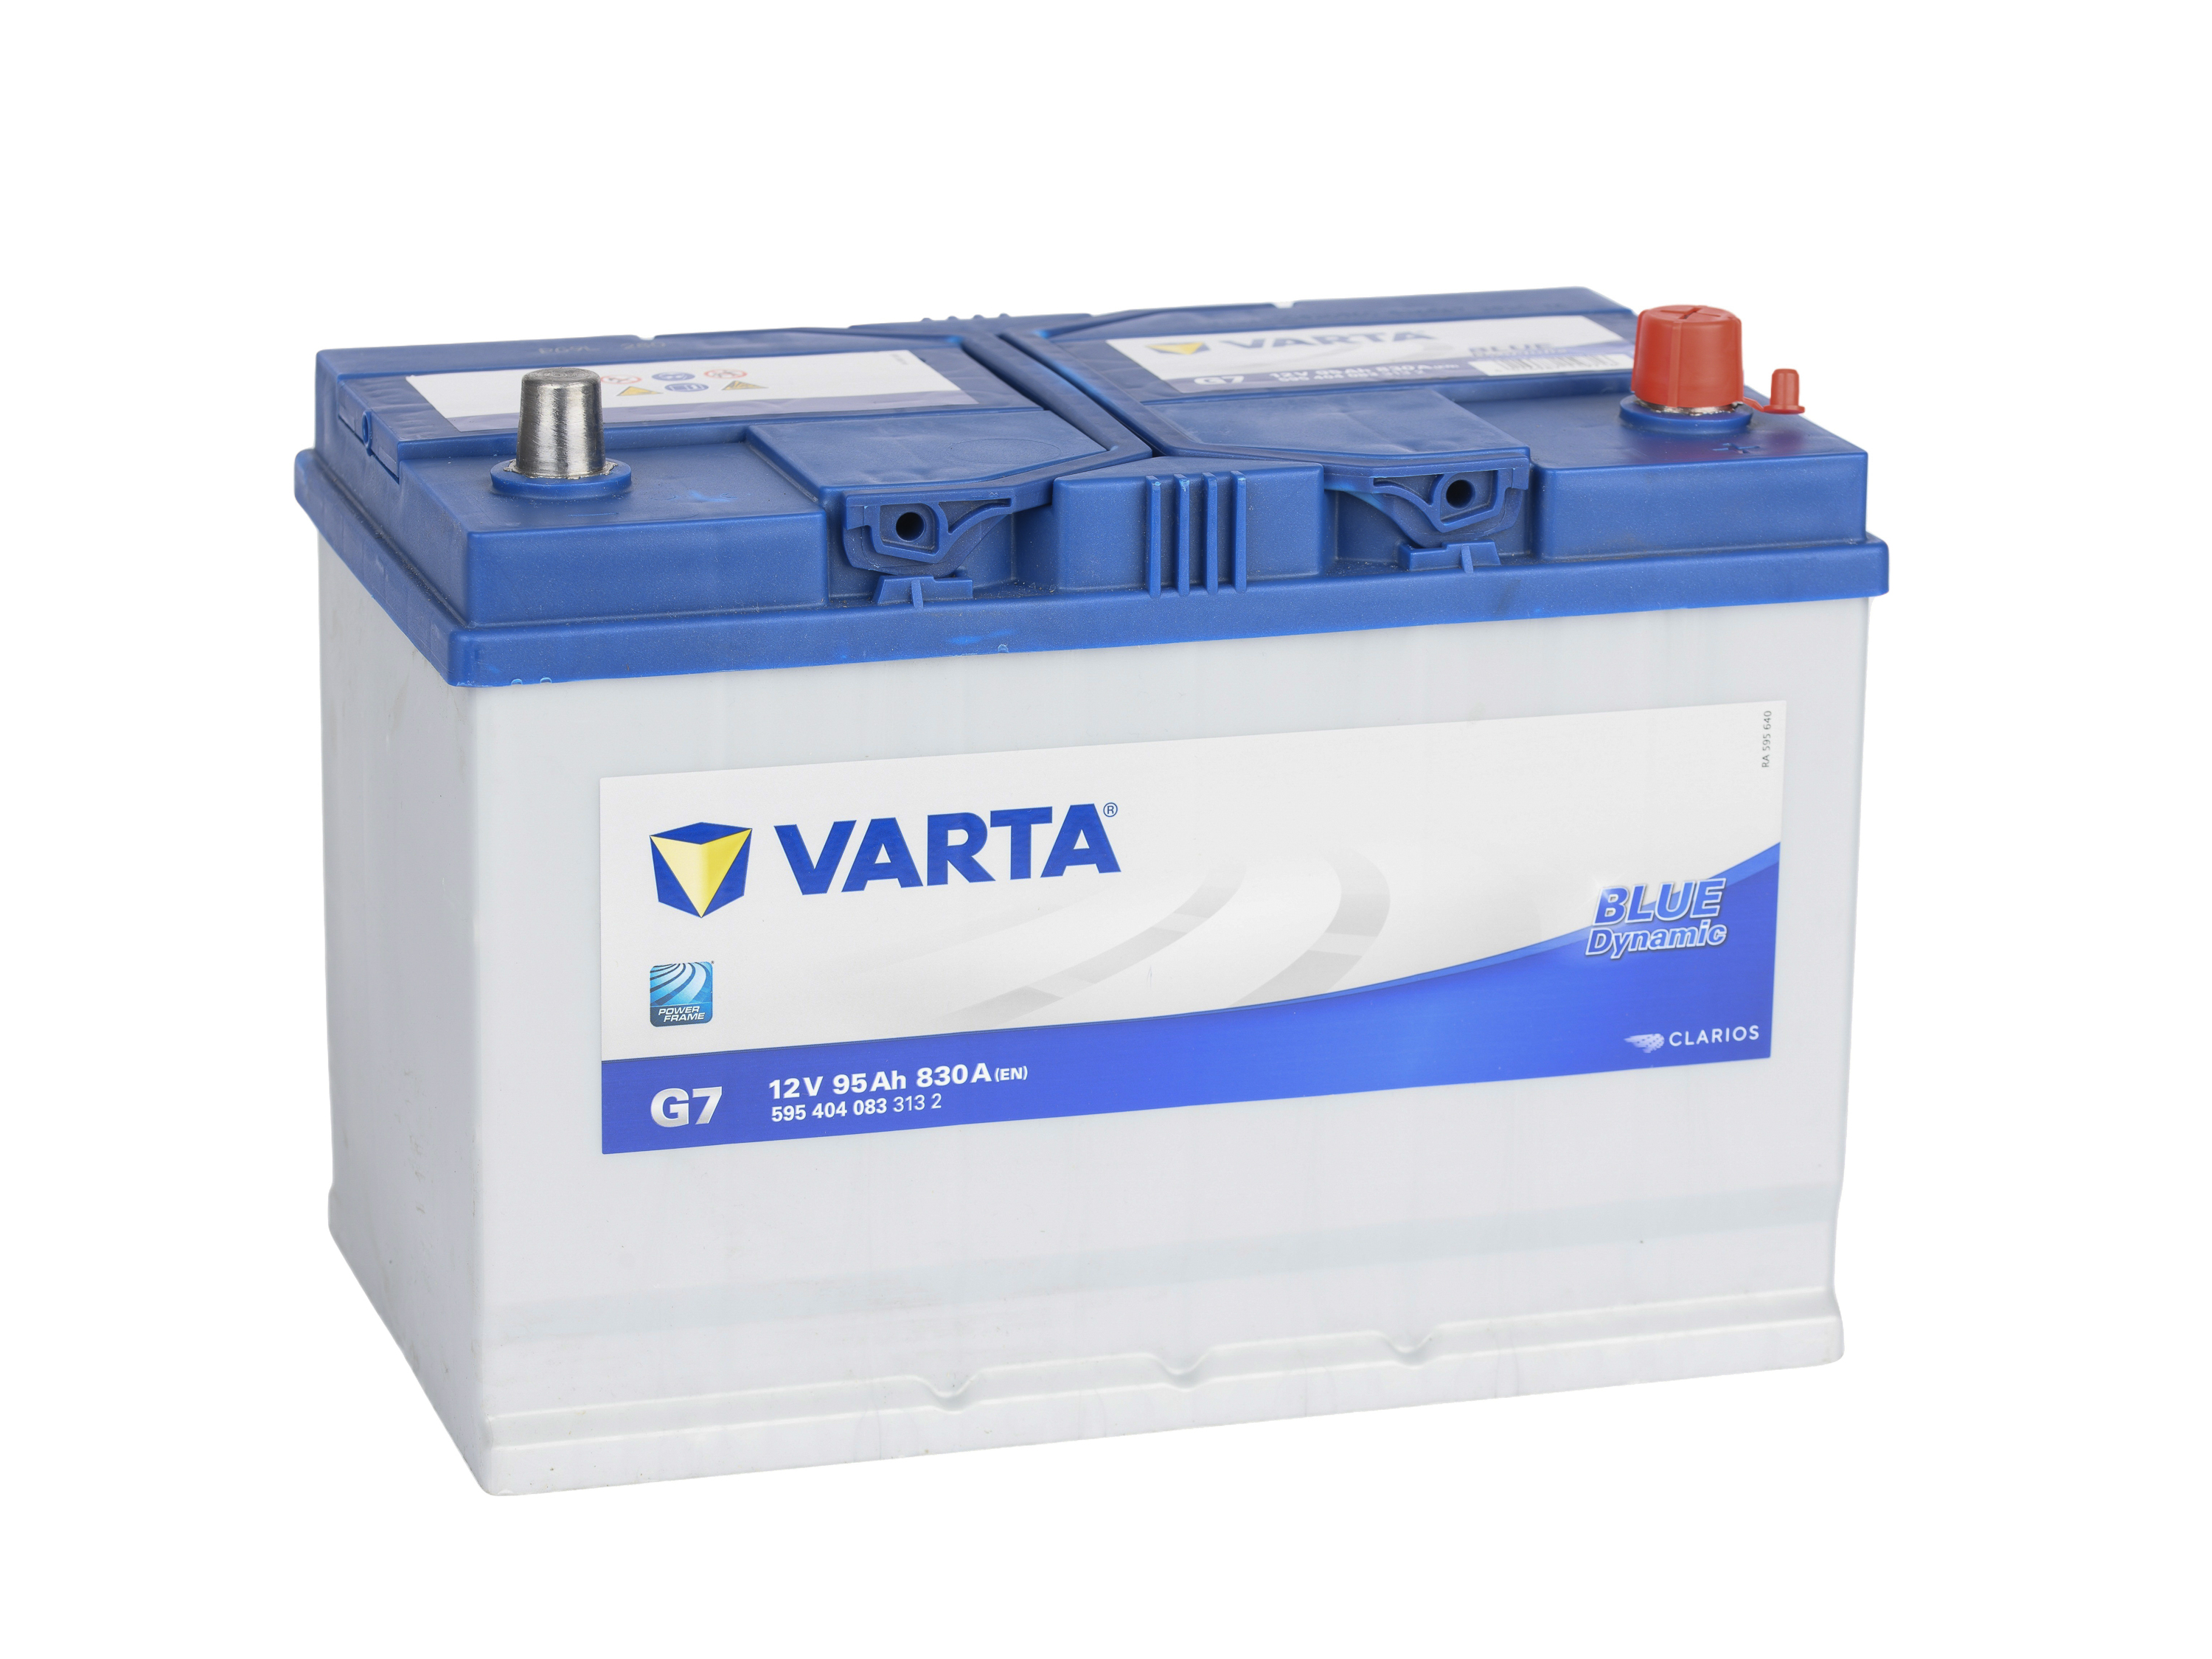 VARTA batteri Blue Dynamic G7 595.404.083 12V/95Ah